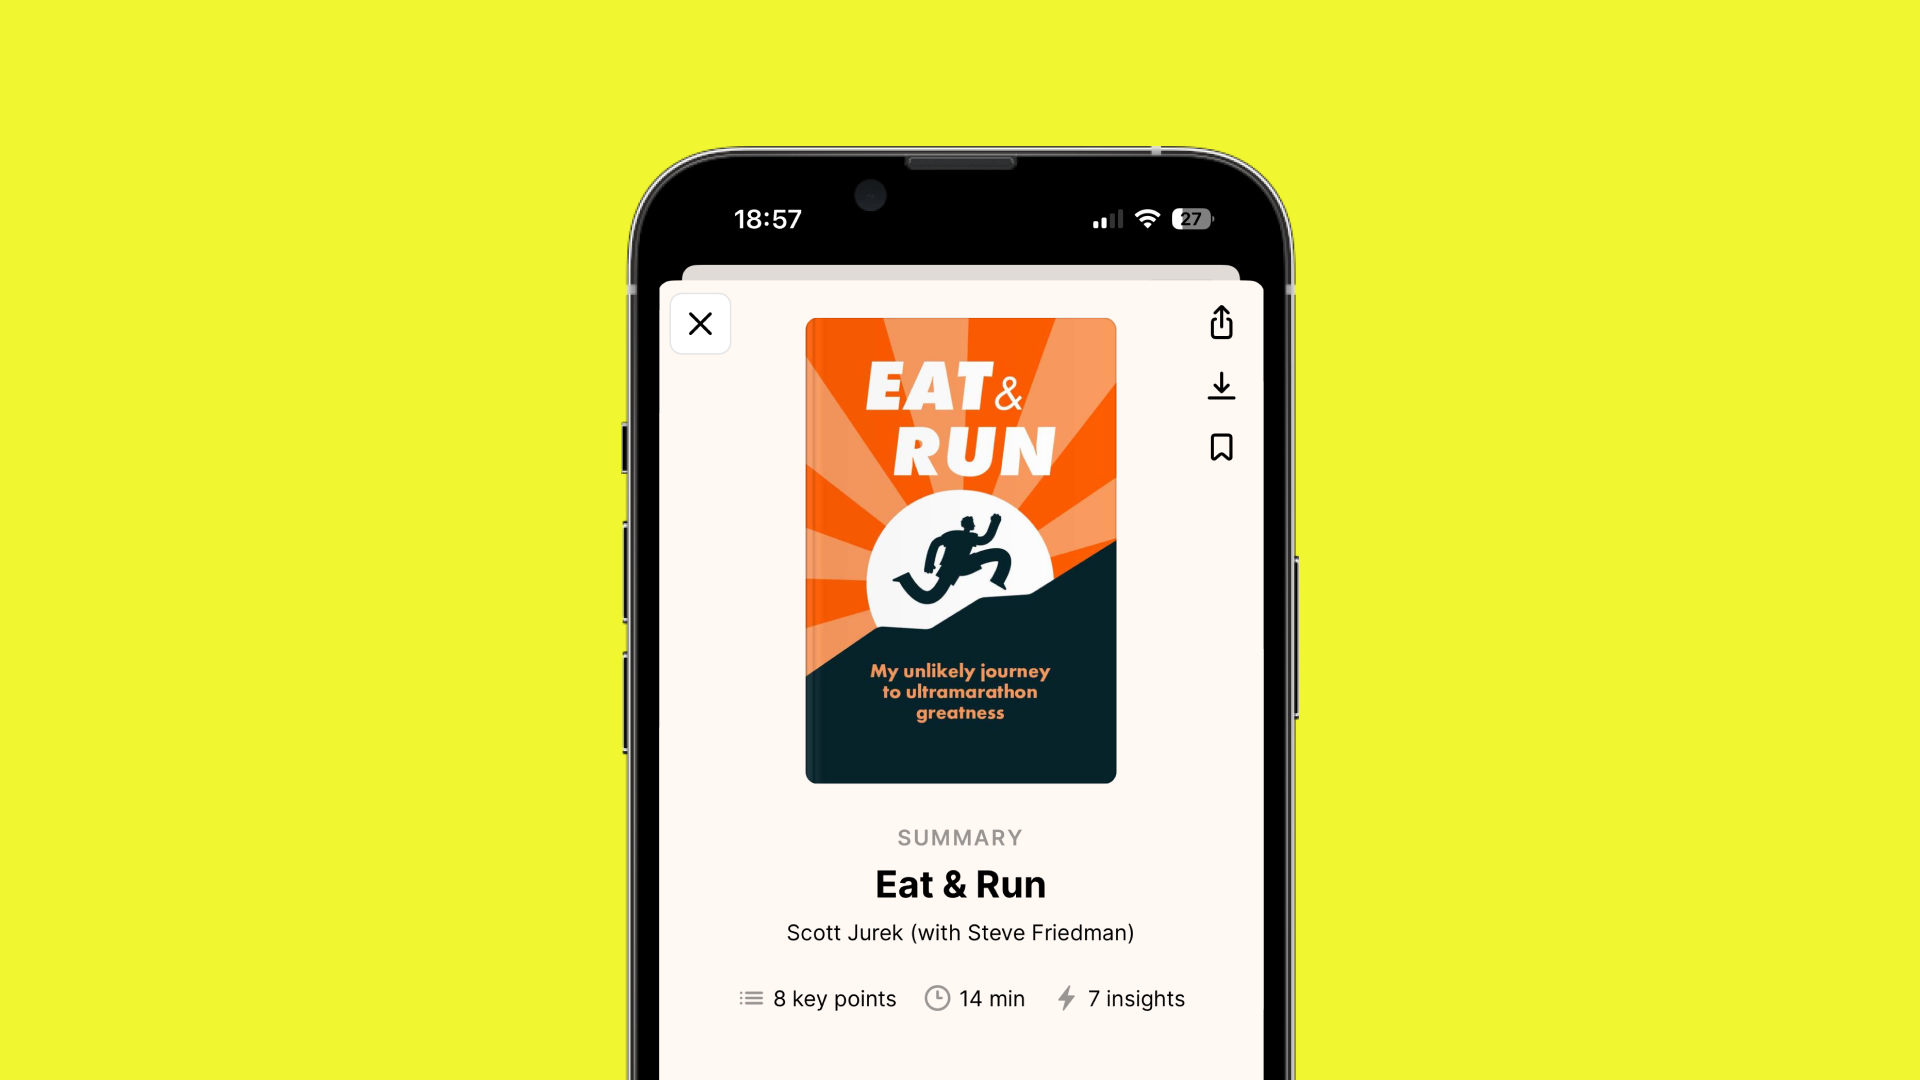 Scott Jurek's Eat & Run: My Unlikely Journey to Ultramarathon Greatness